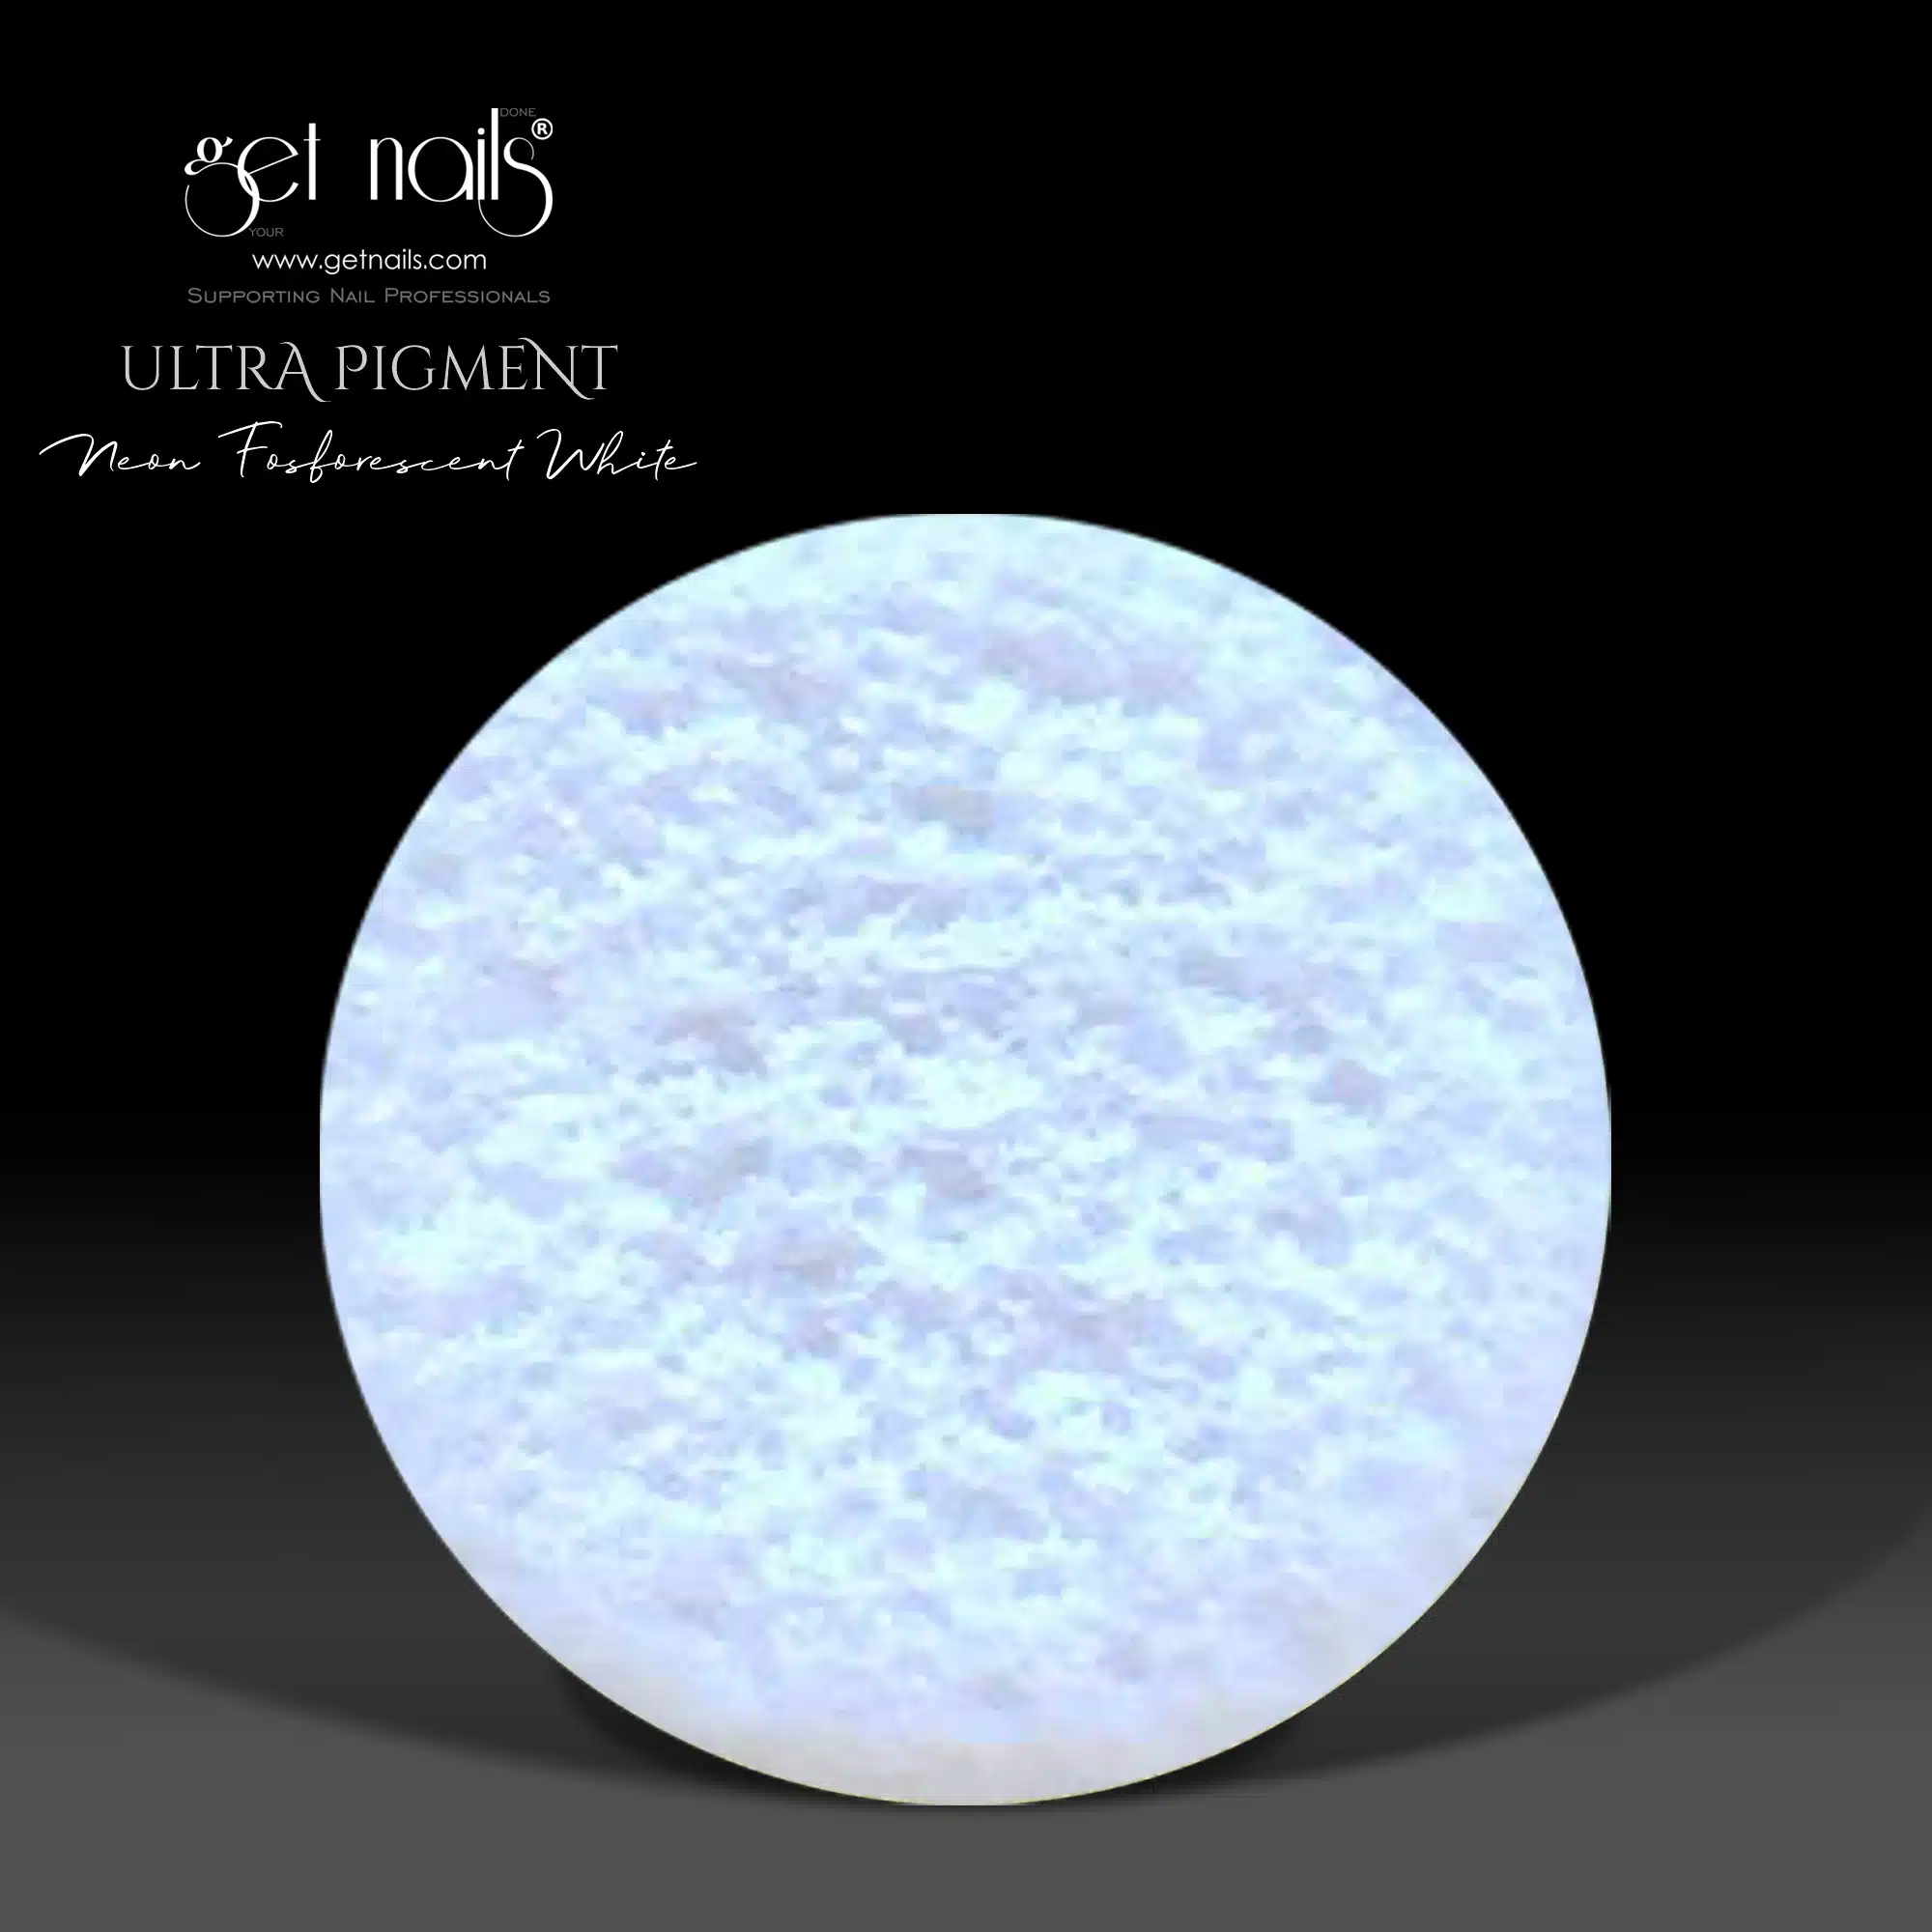 Get Nails Austria - Ultra Pigment Neon Fosforescent White 5g